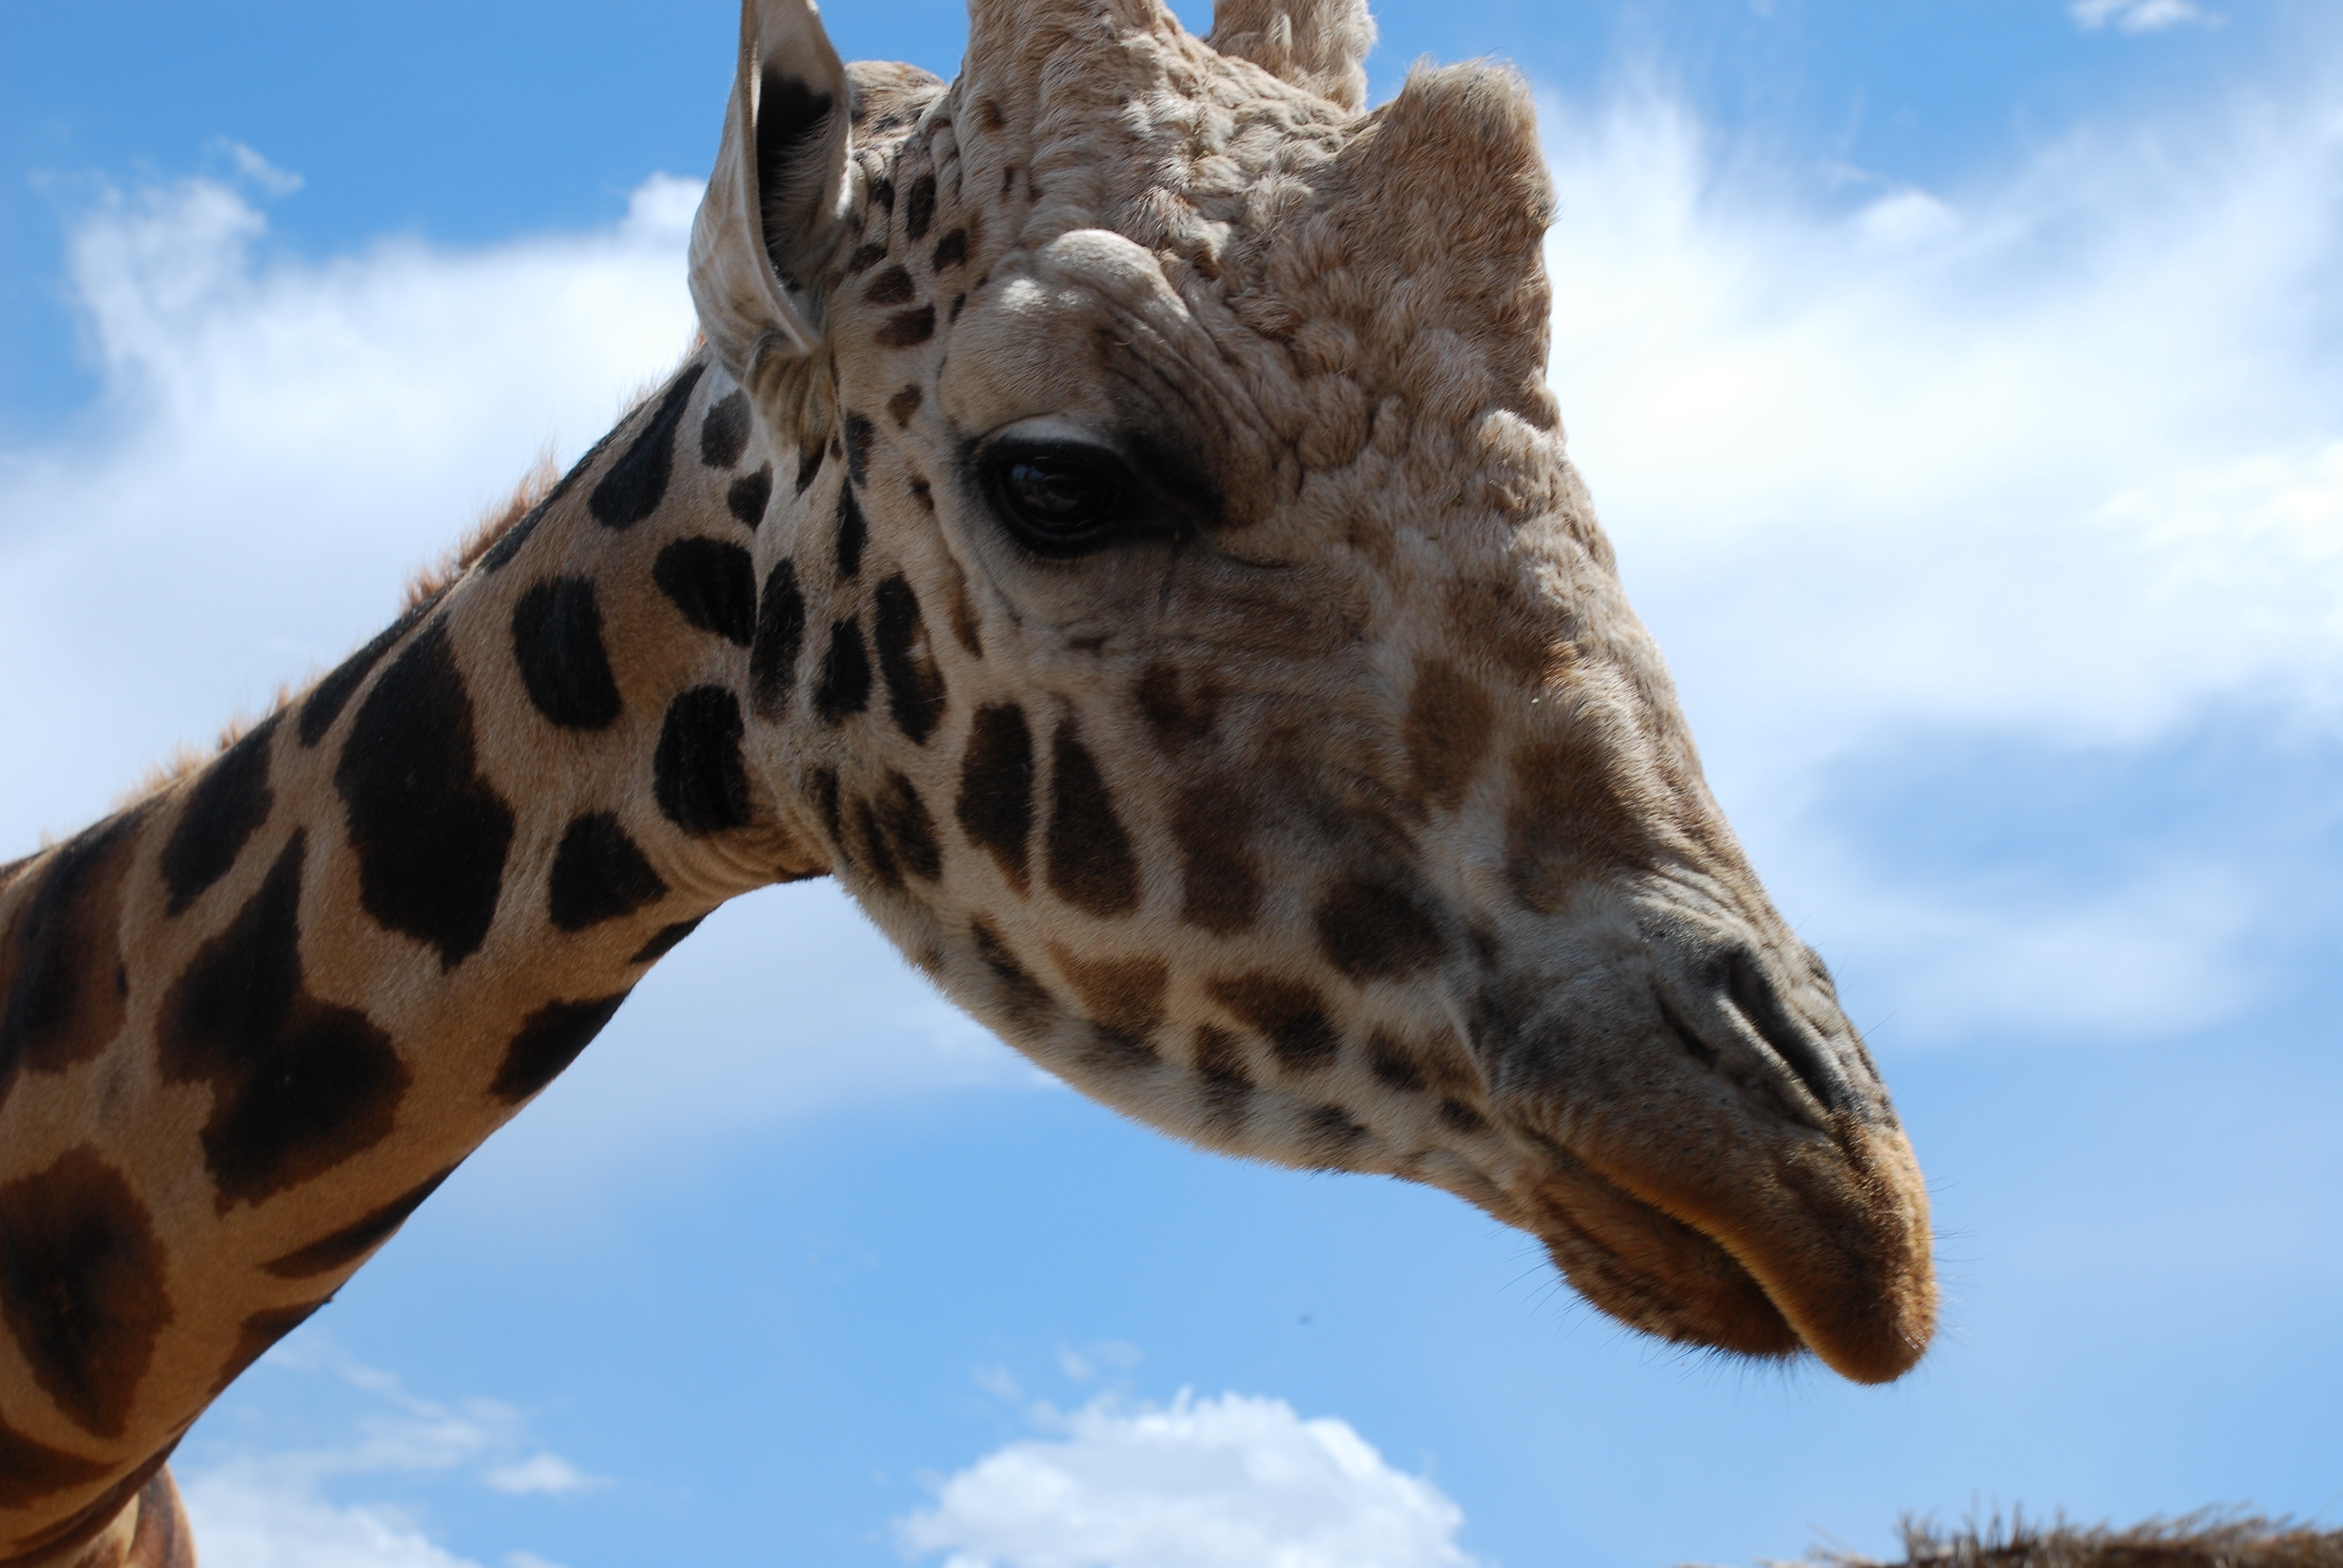 Wildlife, Giraffe, Africa, Safari, Zoo, one animal, animal body part